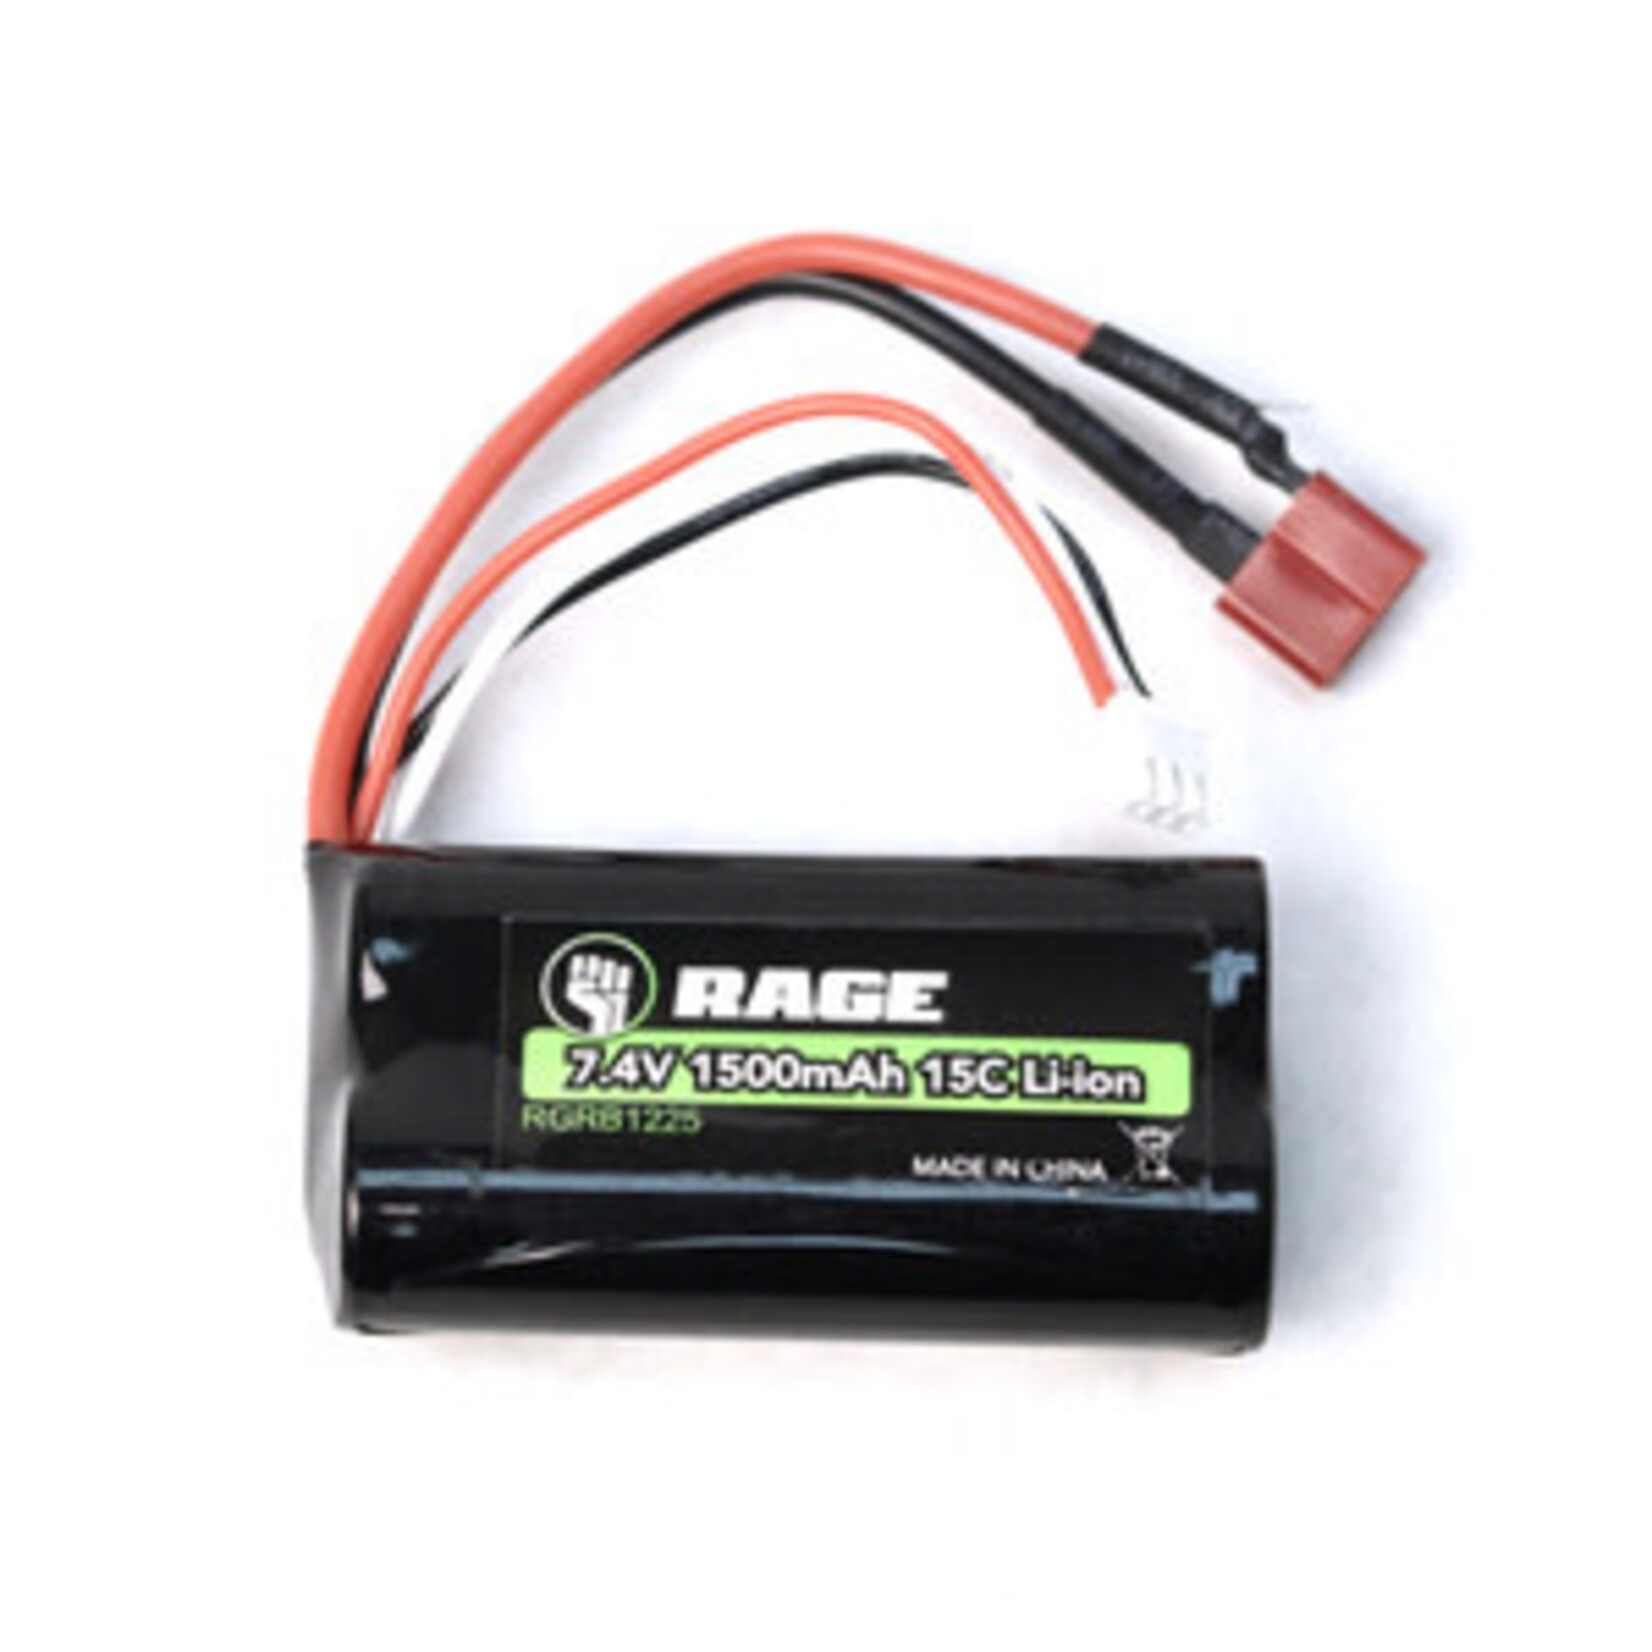 Rage R/C 7.4v, 1500mAh Li-ion Battery: Black Marlin